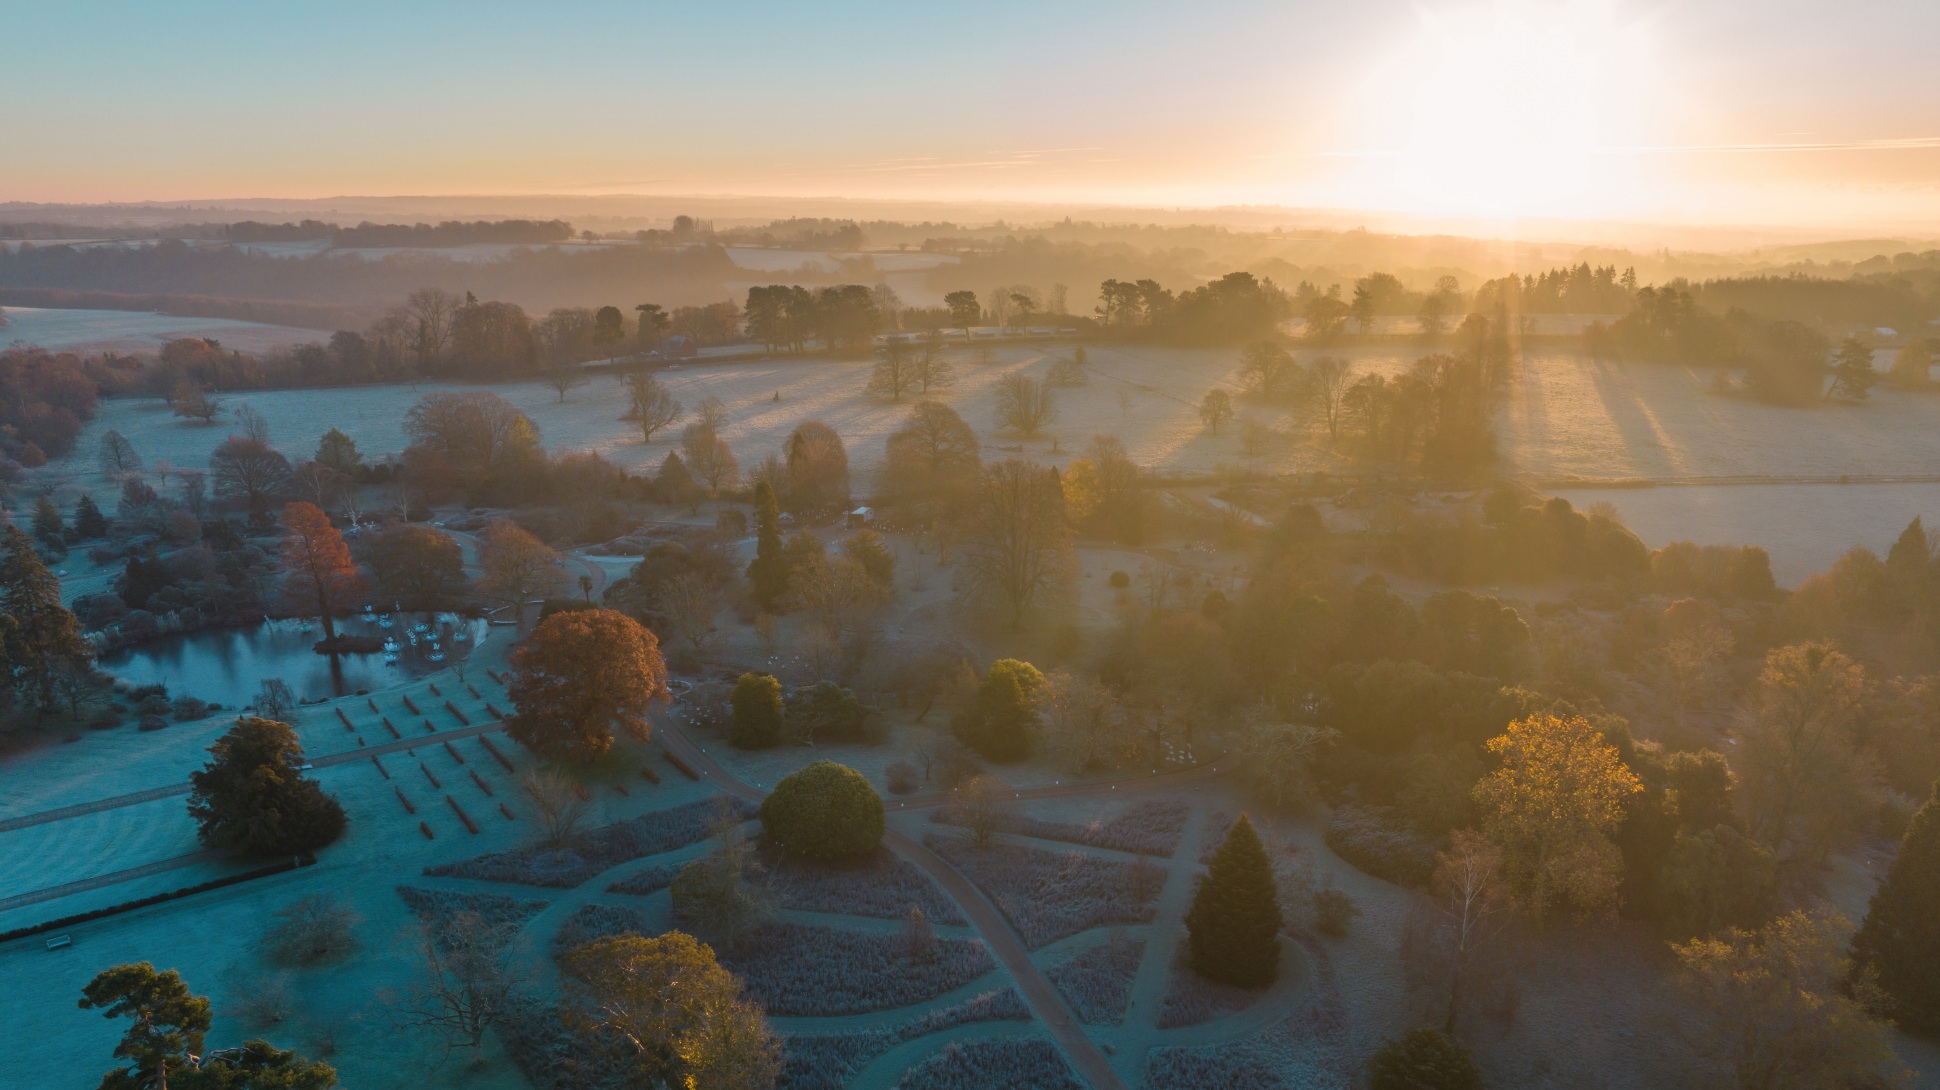 A drone shot of a sunrise over the Wakehurst landscape